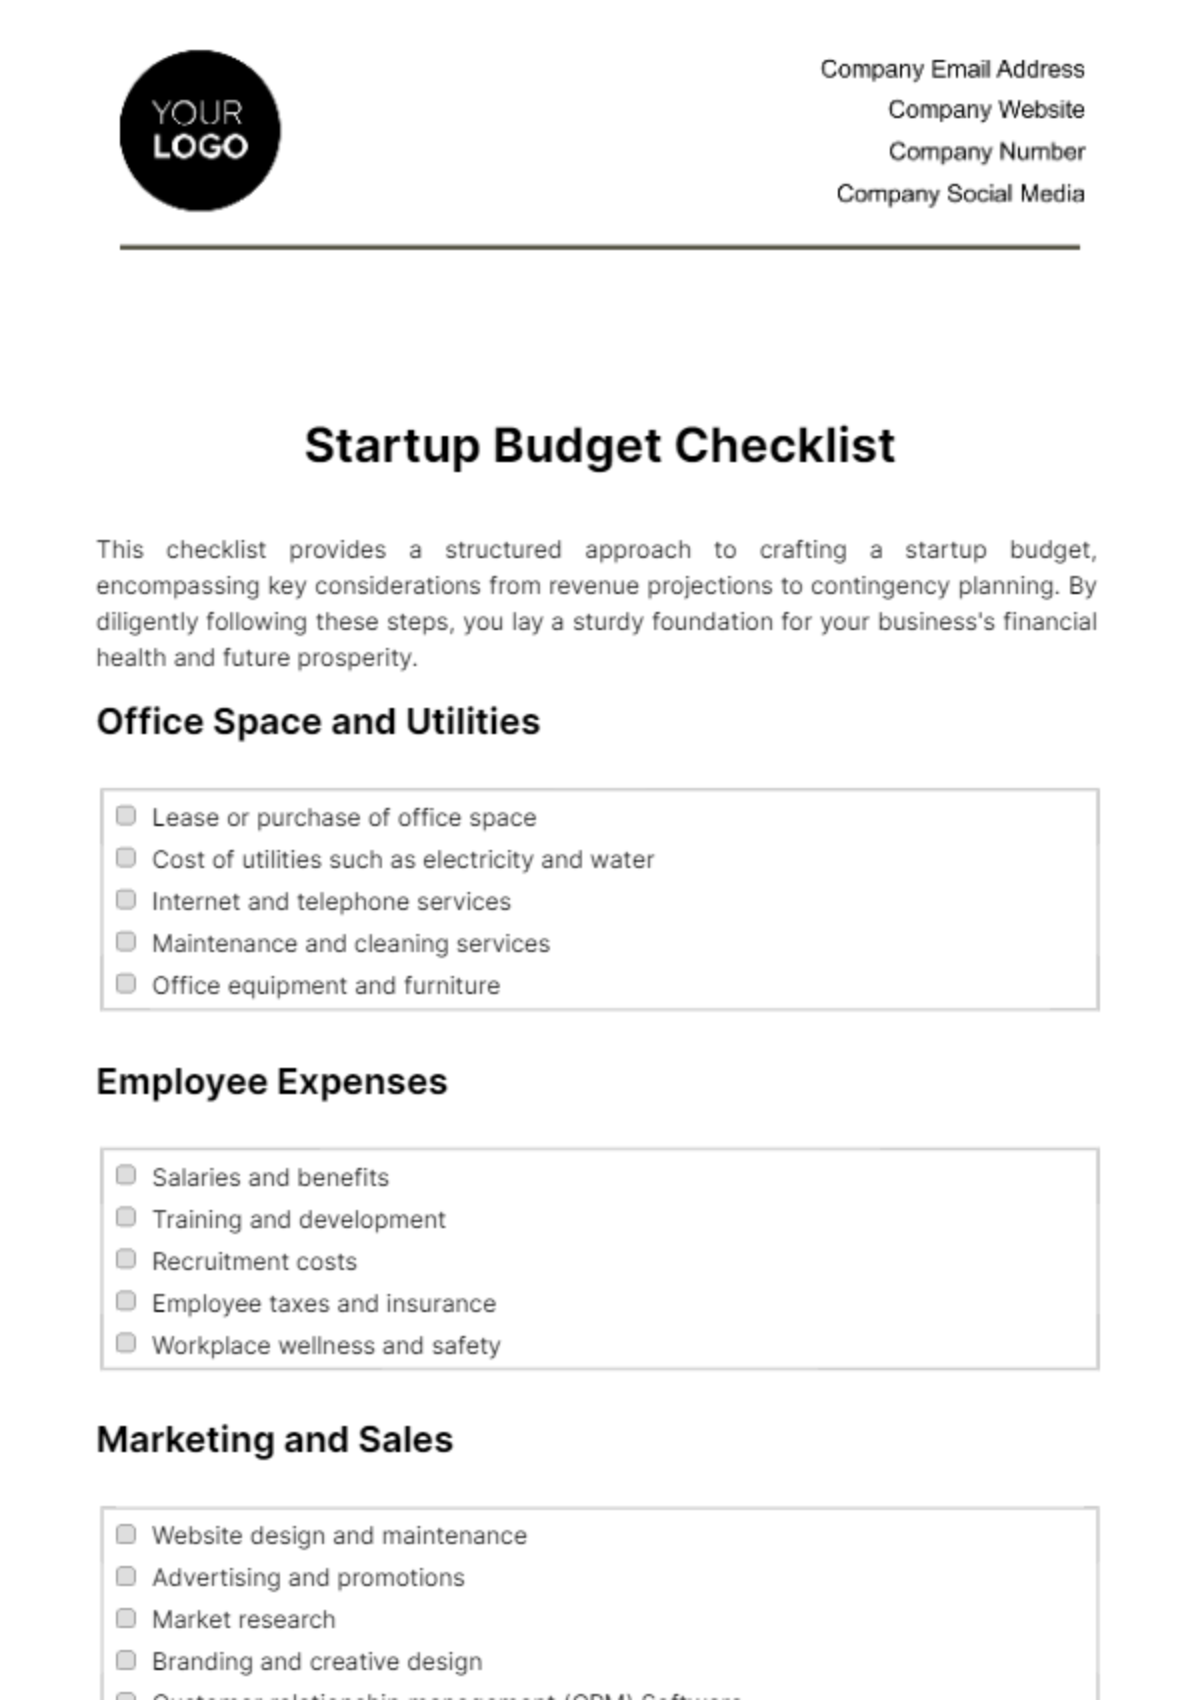 Free Startup Budget Checklist Template